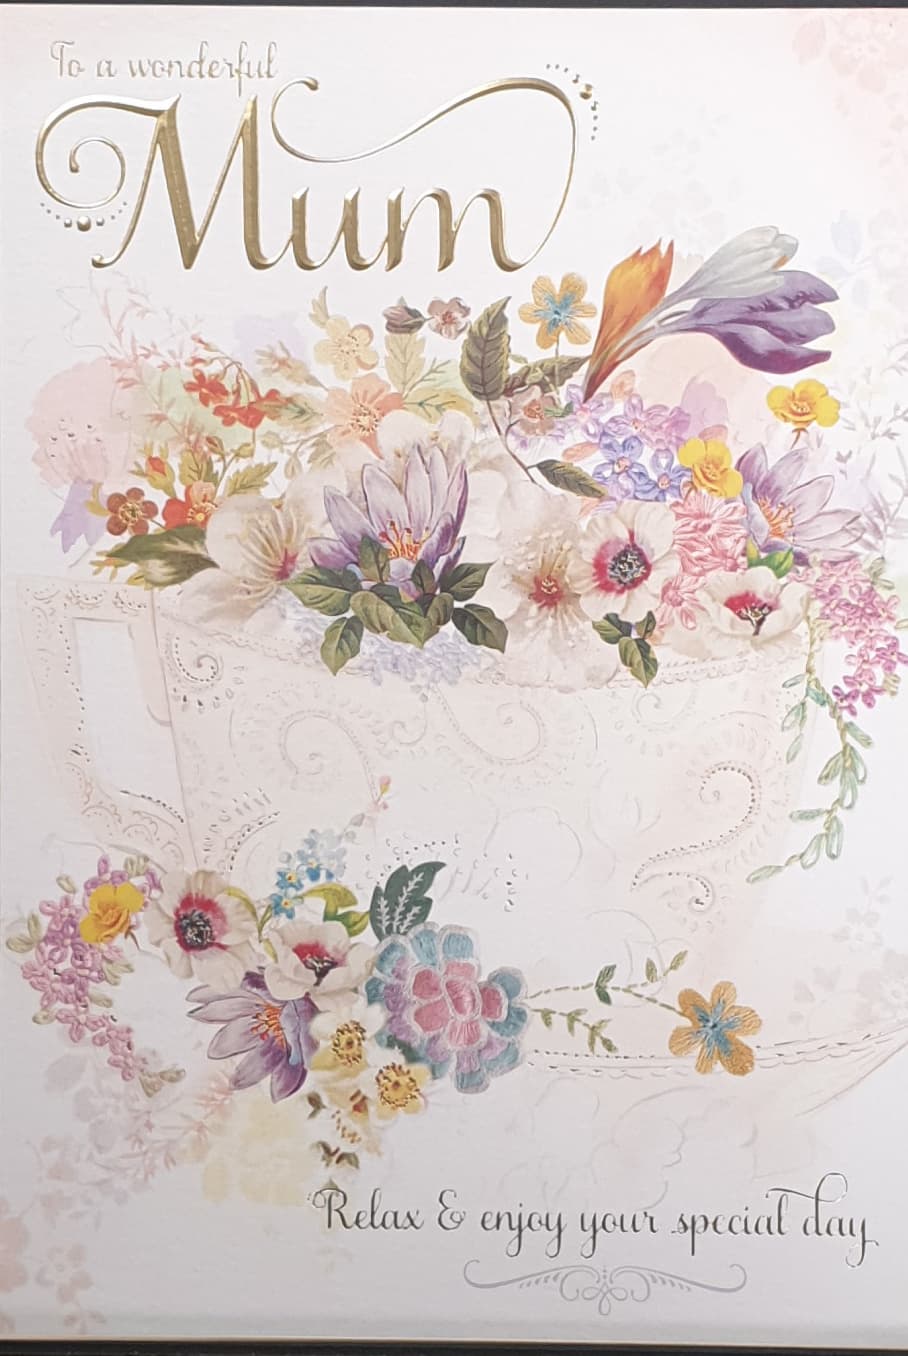 Birthday Card - Mum / A Bouquet Of Flowers For Best Mum